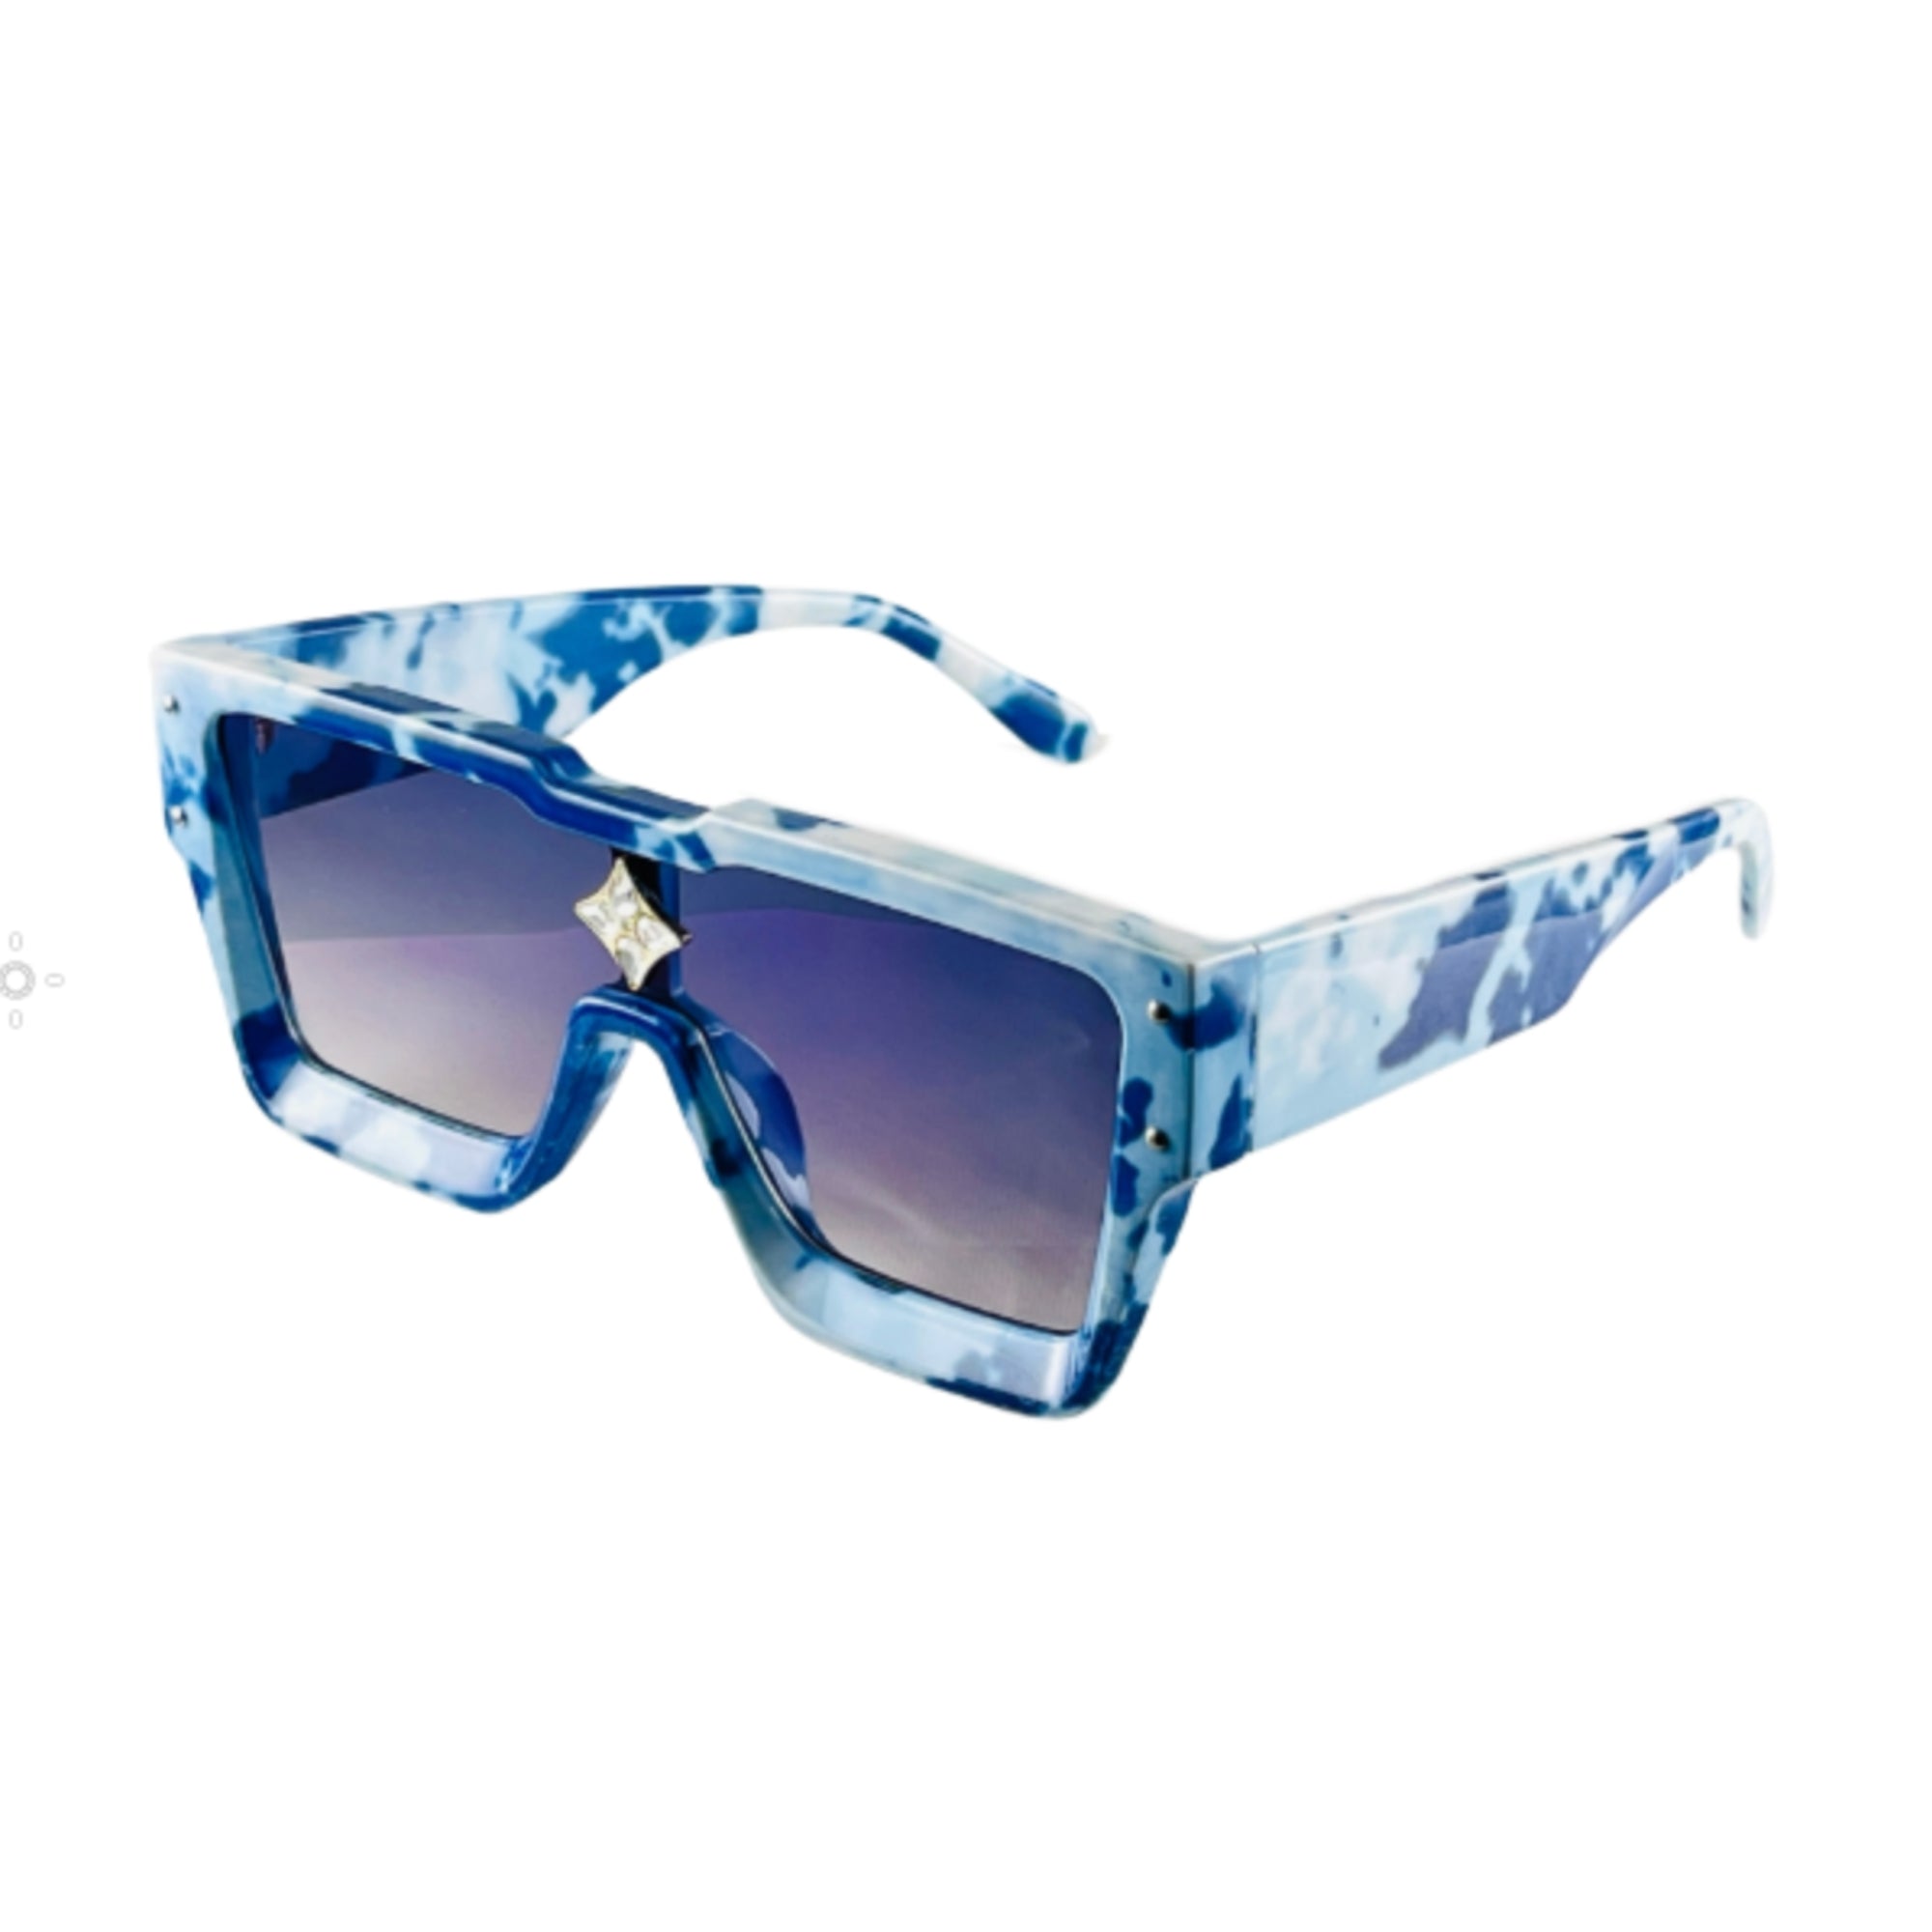 MizDragonfly Accessories Atomic Shield Sunglasses Neptune Blue Angle Side